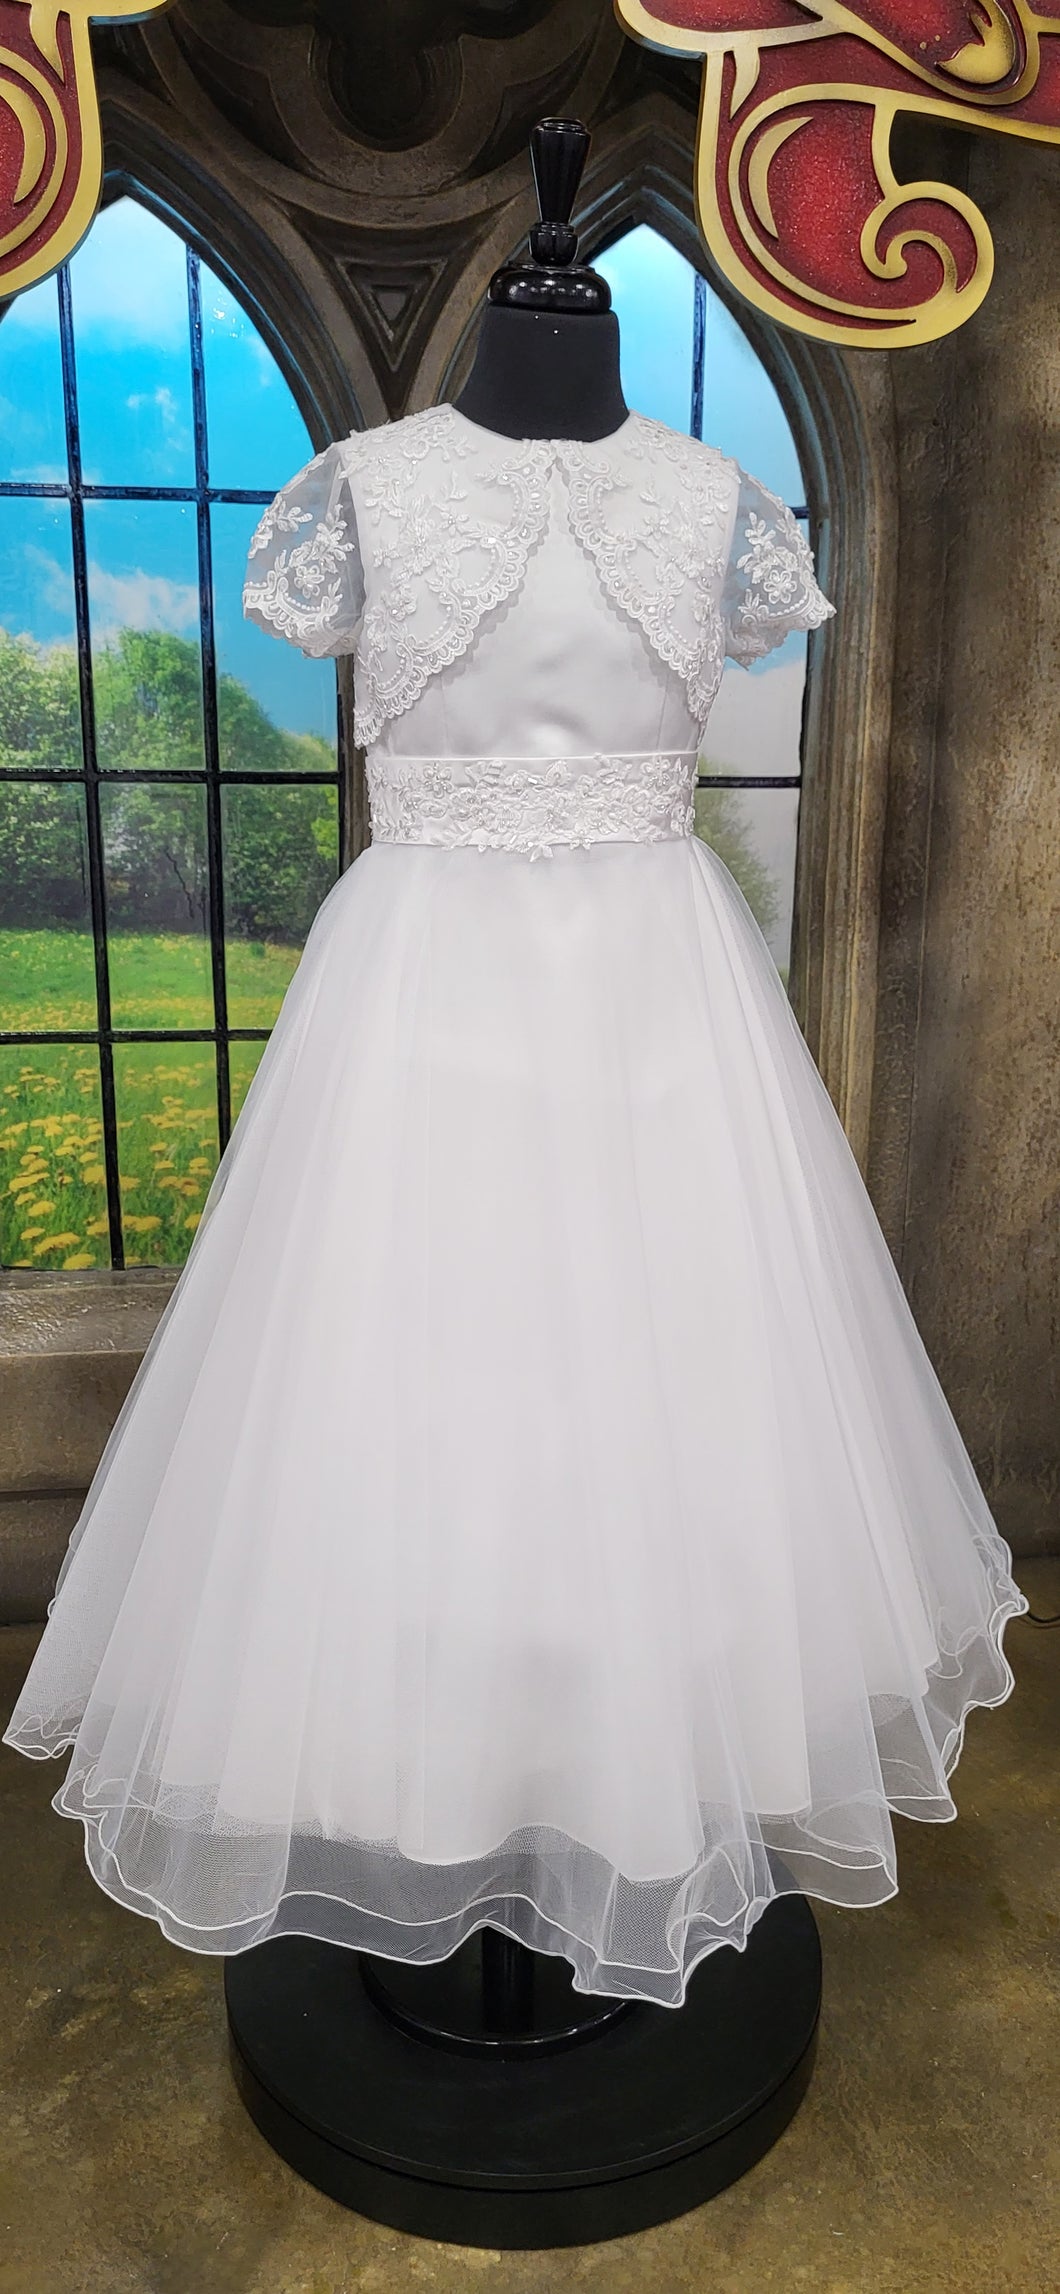 Isabella Girls White Communion Dress:- 83GO3324